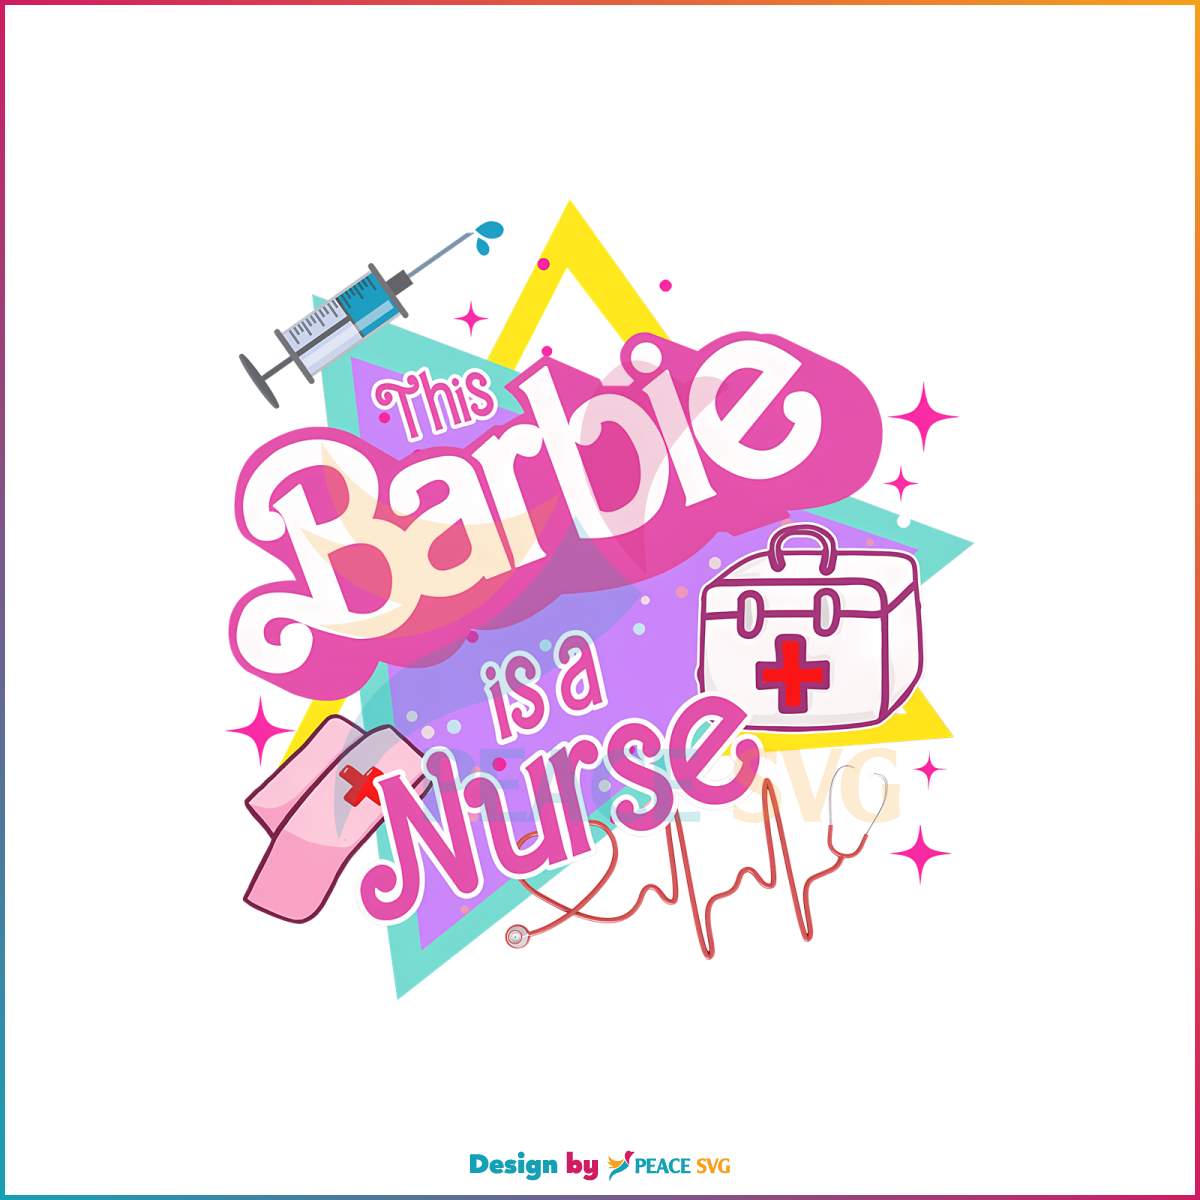 this-barbie-is-a-nurse-png-barbie-nurse-png-download